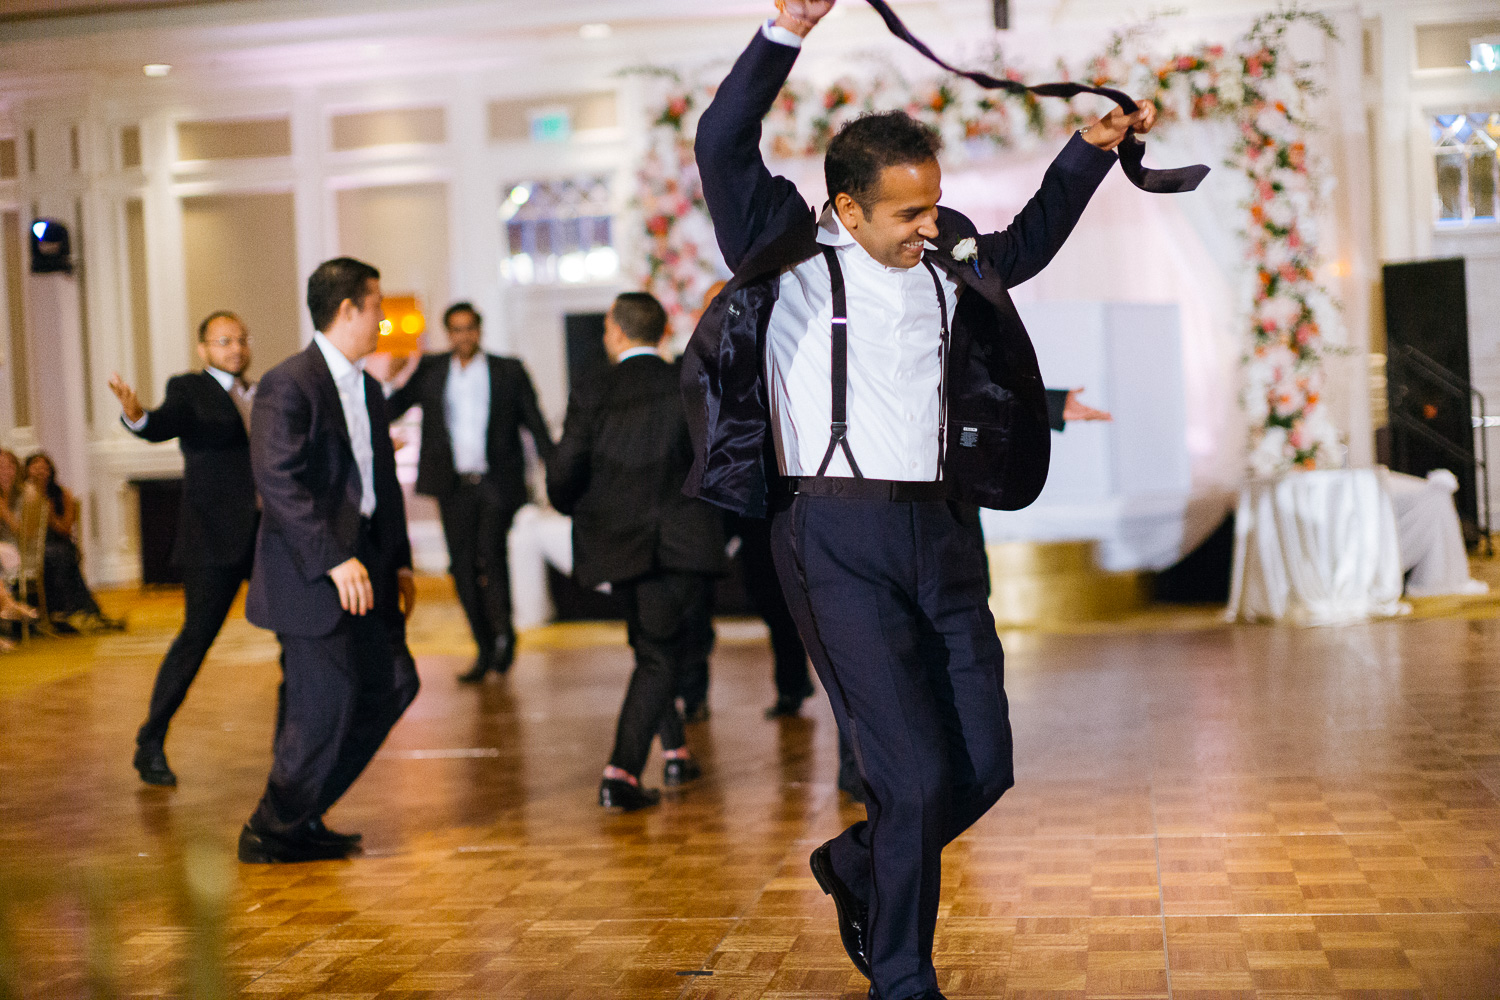 Special dance with groom and groomsmen Hindu Jewish fusion wedding Sugar Land Marriott Hotel Texas-086